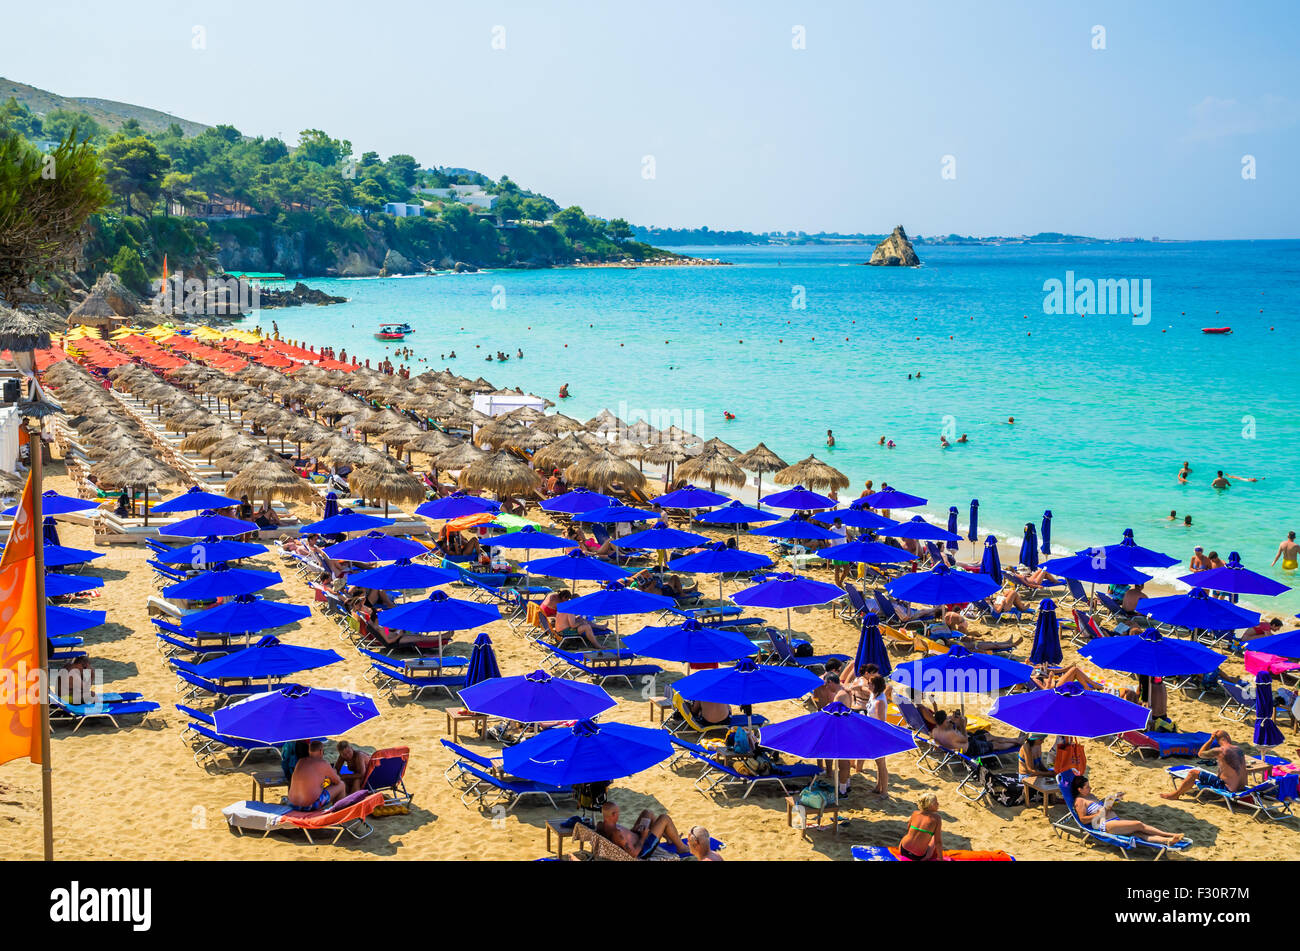 Spectacular view over the beaches of Platis Gialos and Makris Gialos near Lassi, Argostoli. Kefalonia Island, Greece Stock Photo